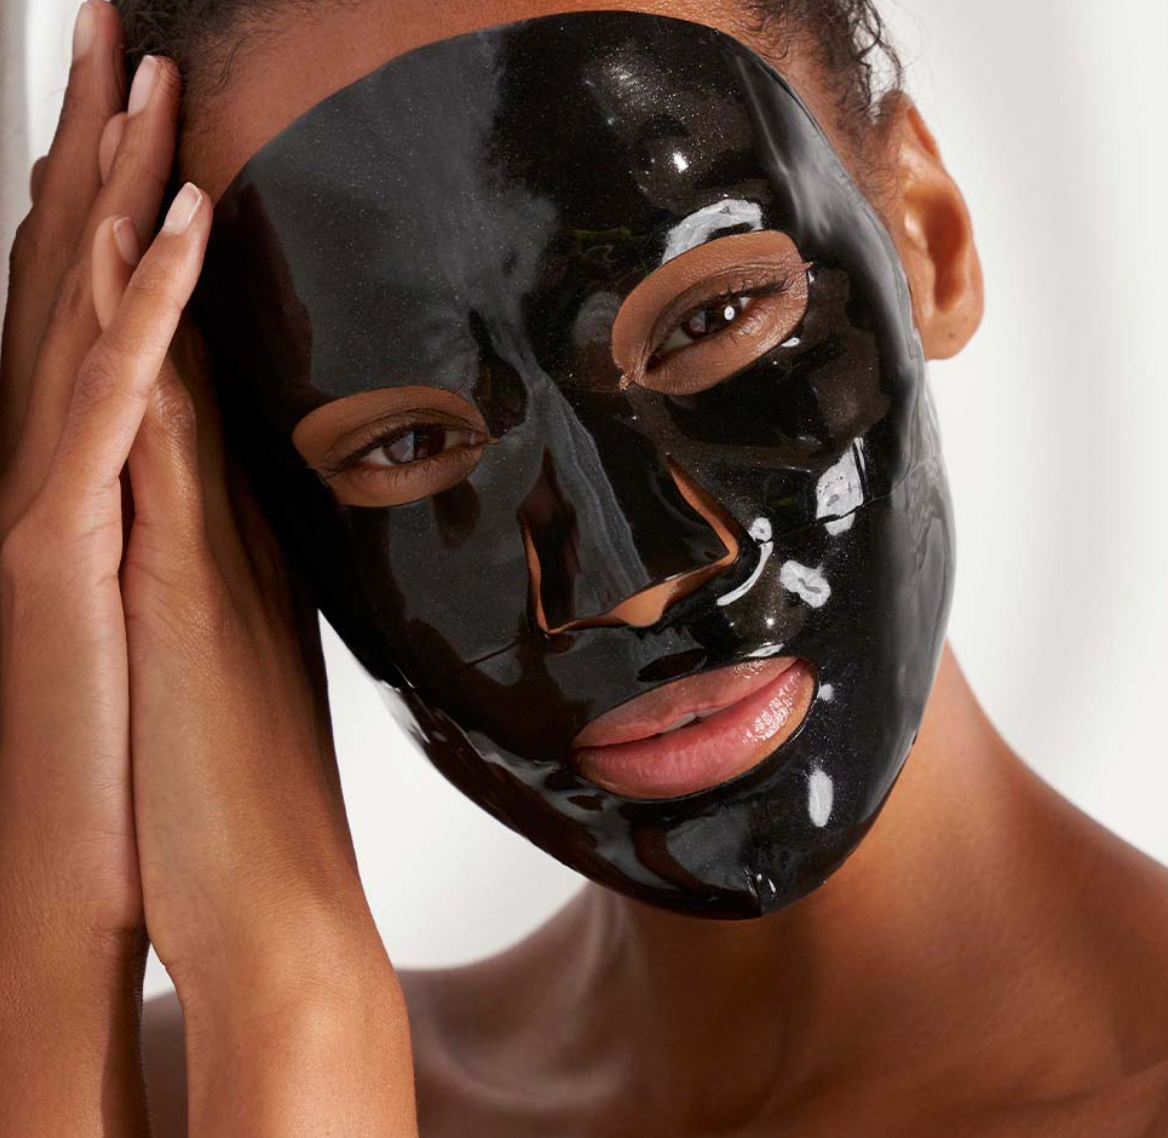 Lifting Treatment Face Mask